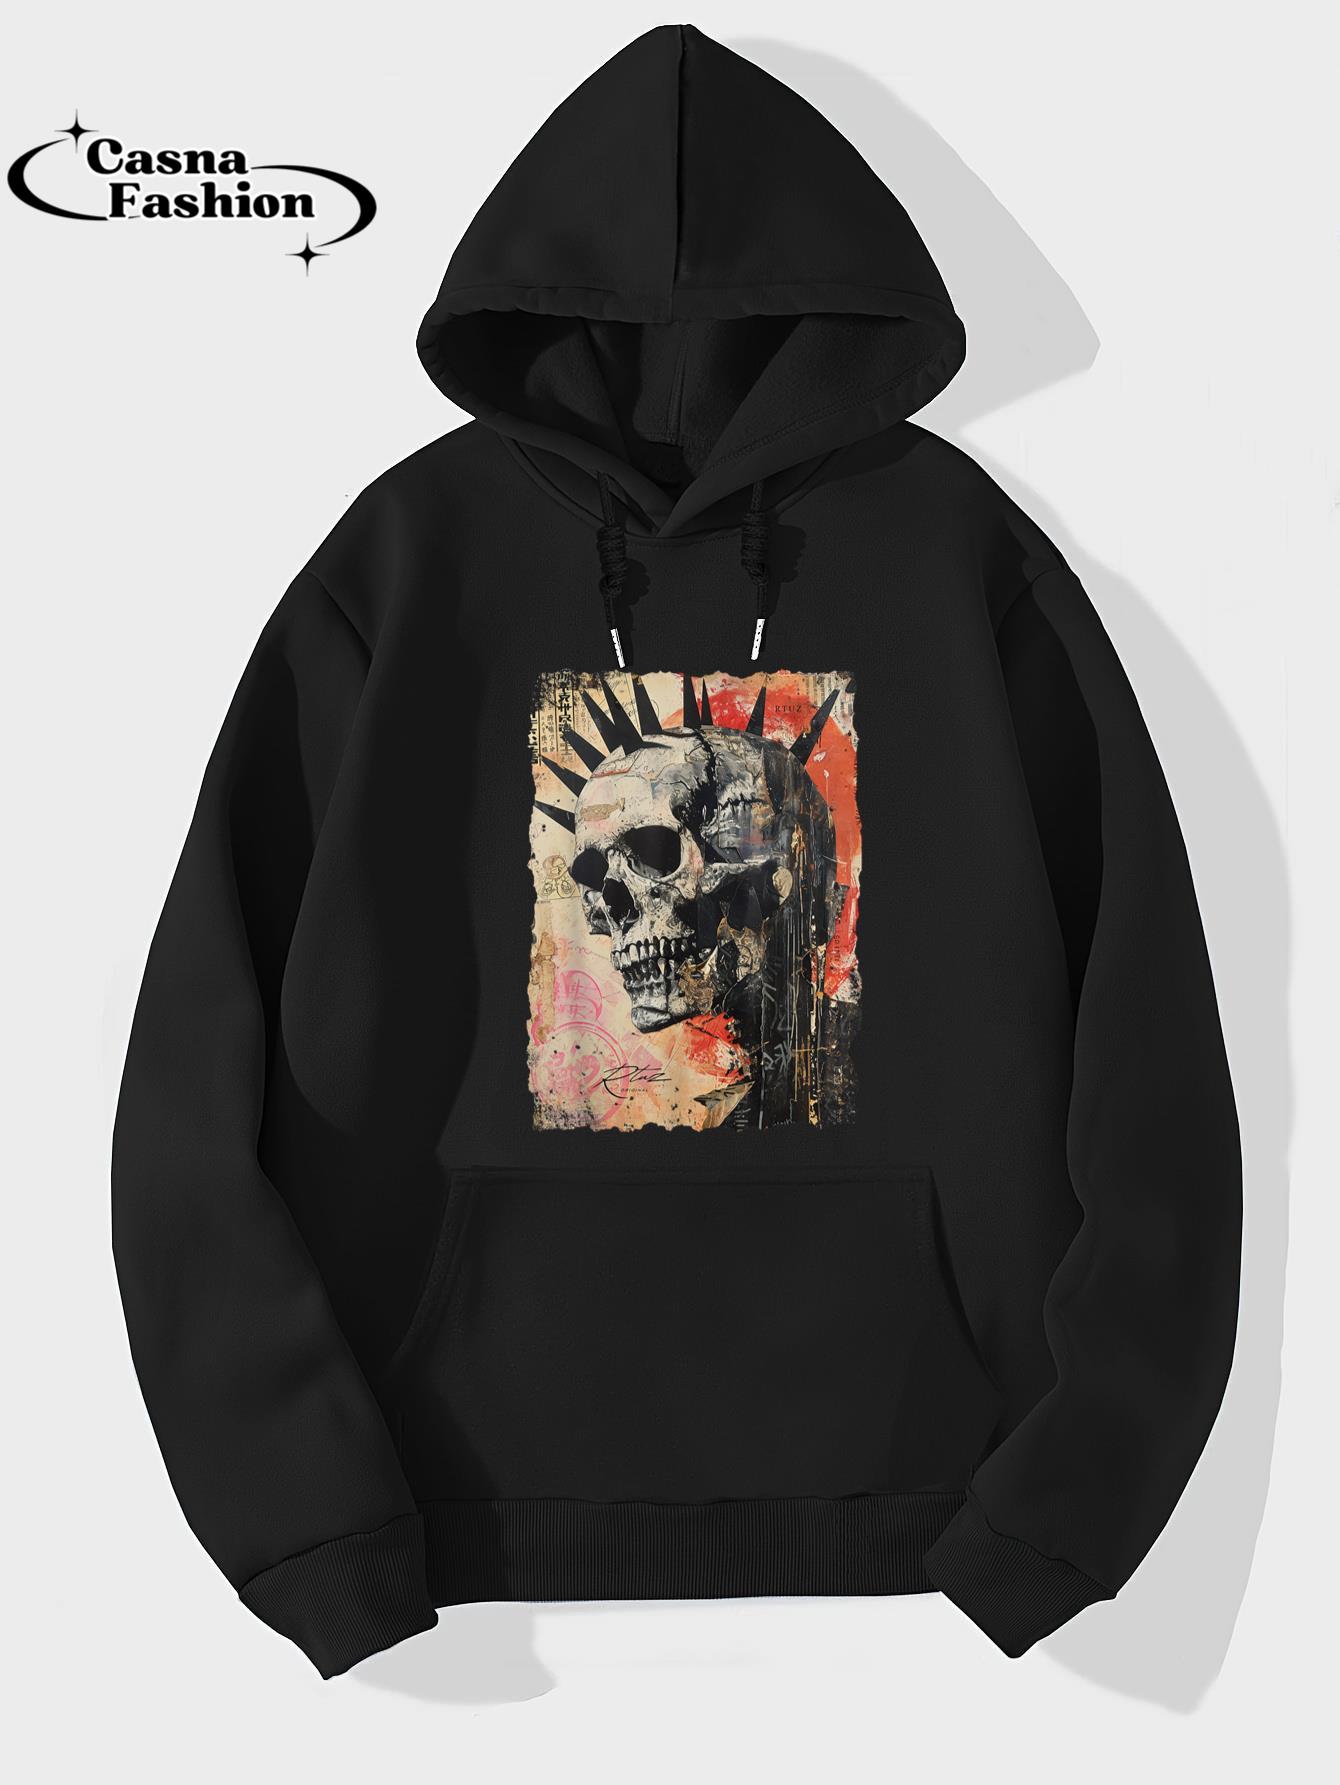 casnafashion_Hoodie_Vintage Graffiti Biker Rocker Skull Punk Horror Skull T-Shirt_hoodie_black hoodie